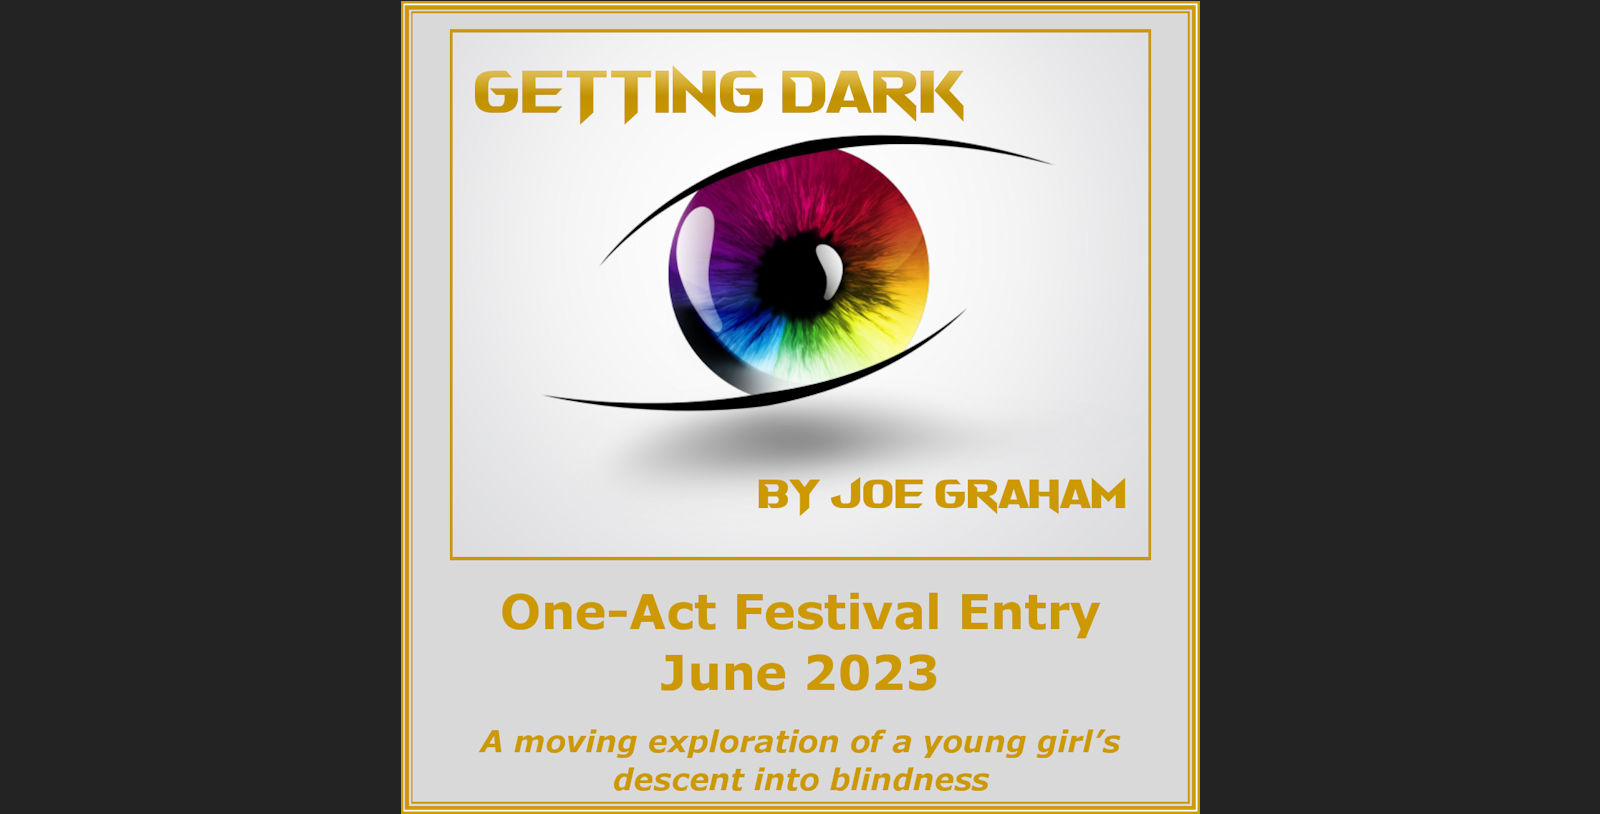 Getting Dark by Joe Graham